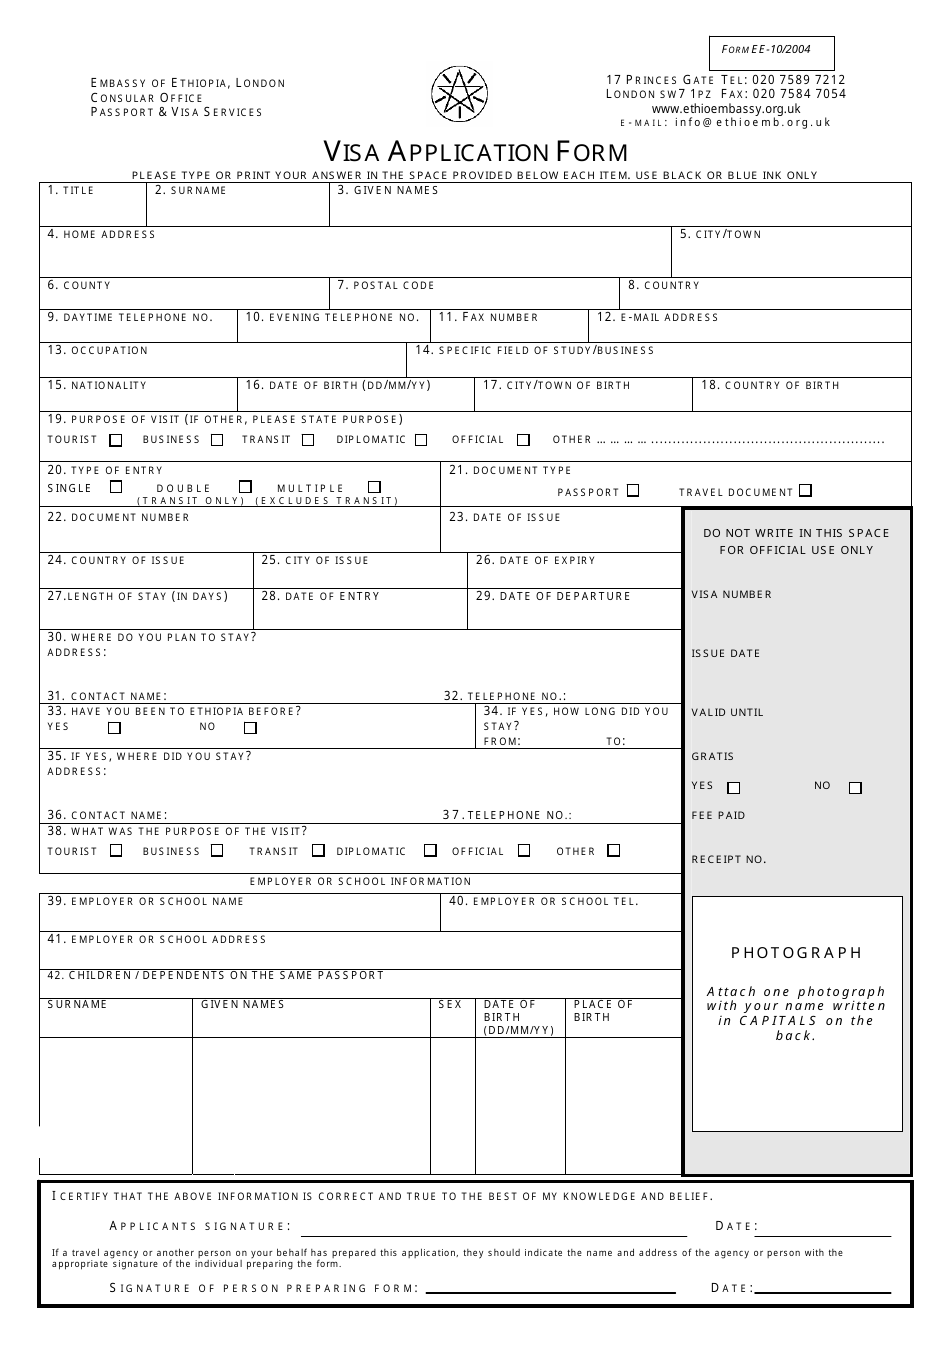 Form EE 10 2004 Download Printable PDF Or Fill Online Ethiopia Visa 